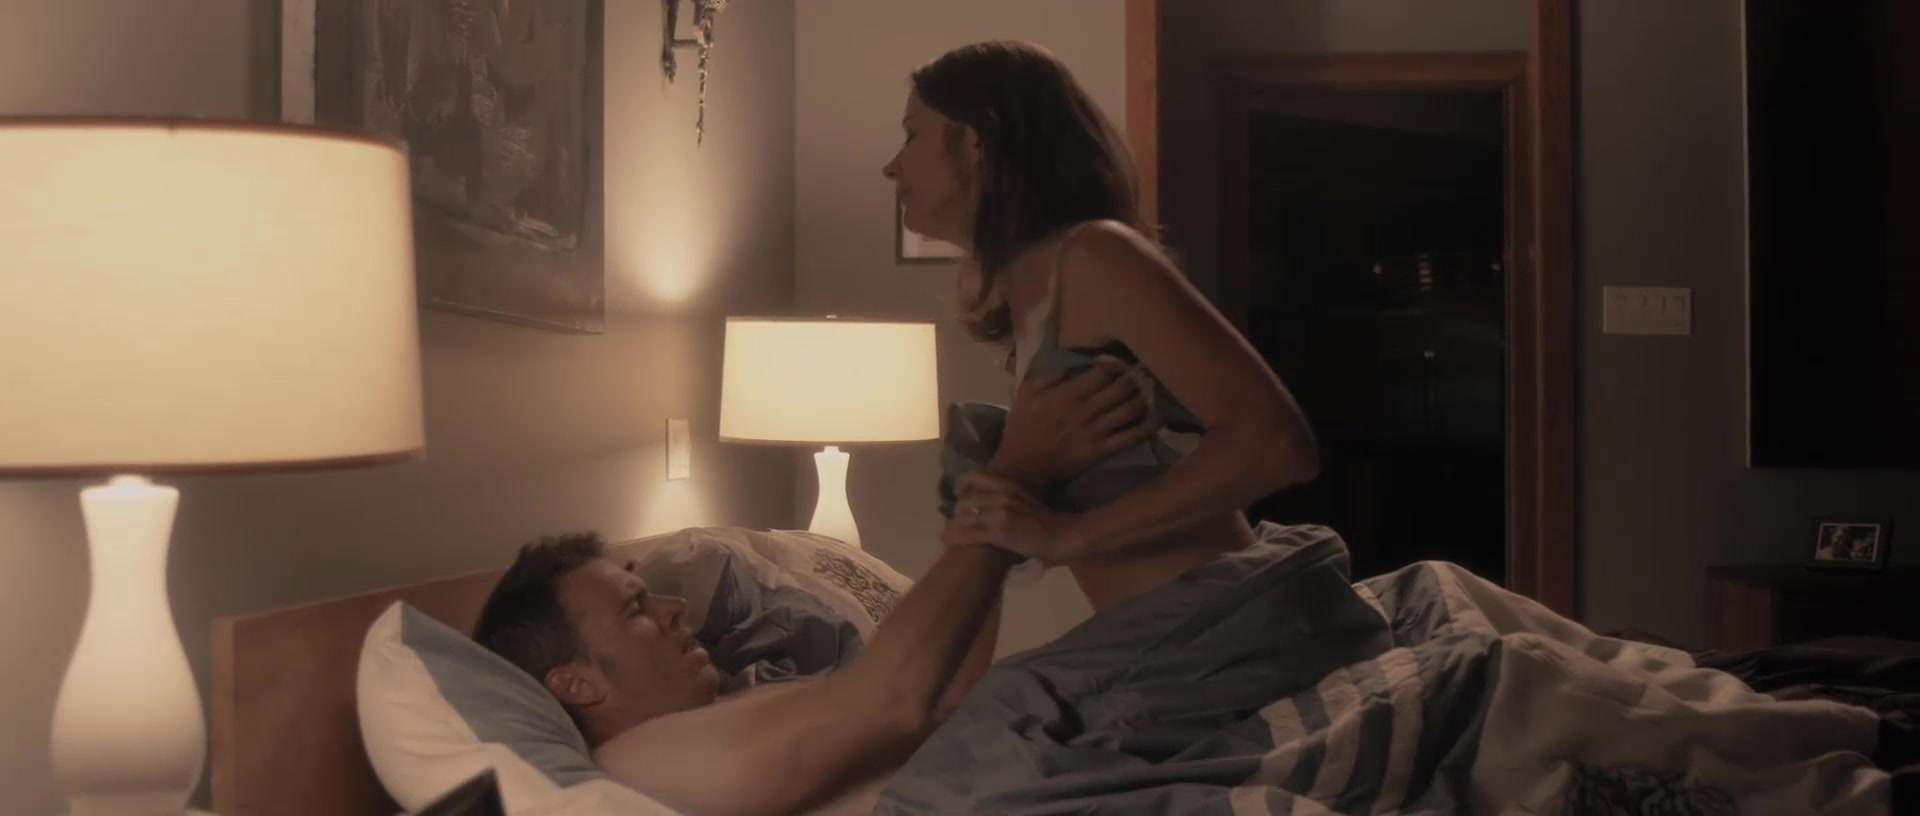 Nude Video Celebs Movie Lets Kill Wards Wife